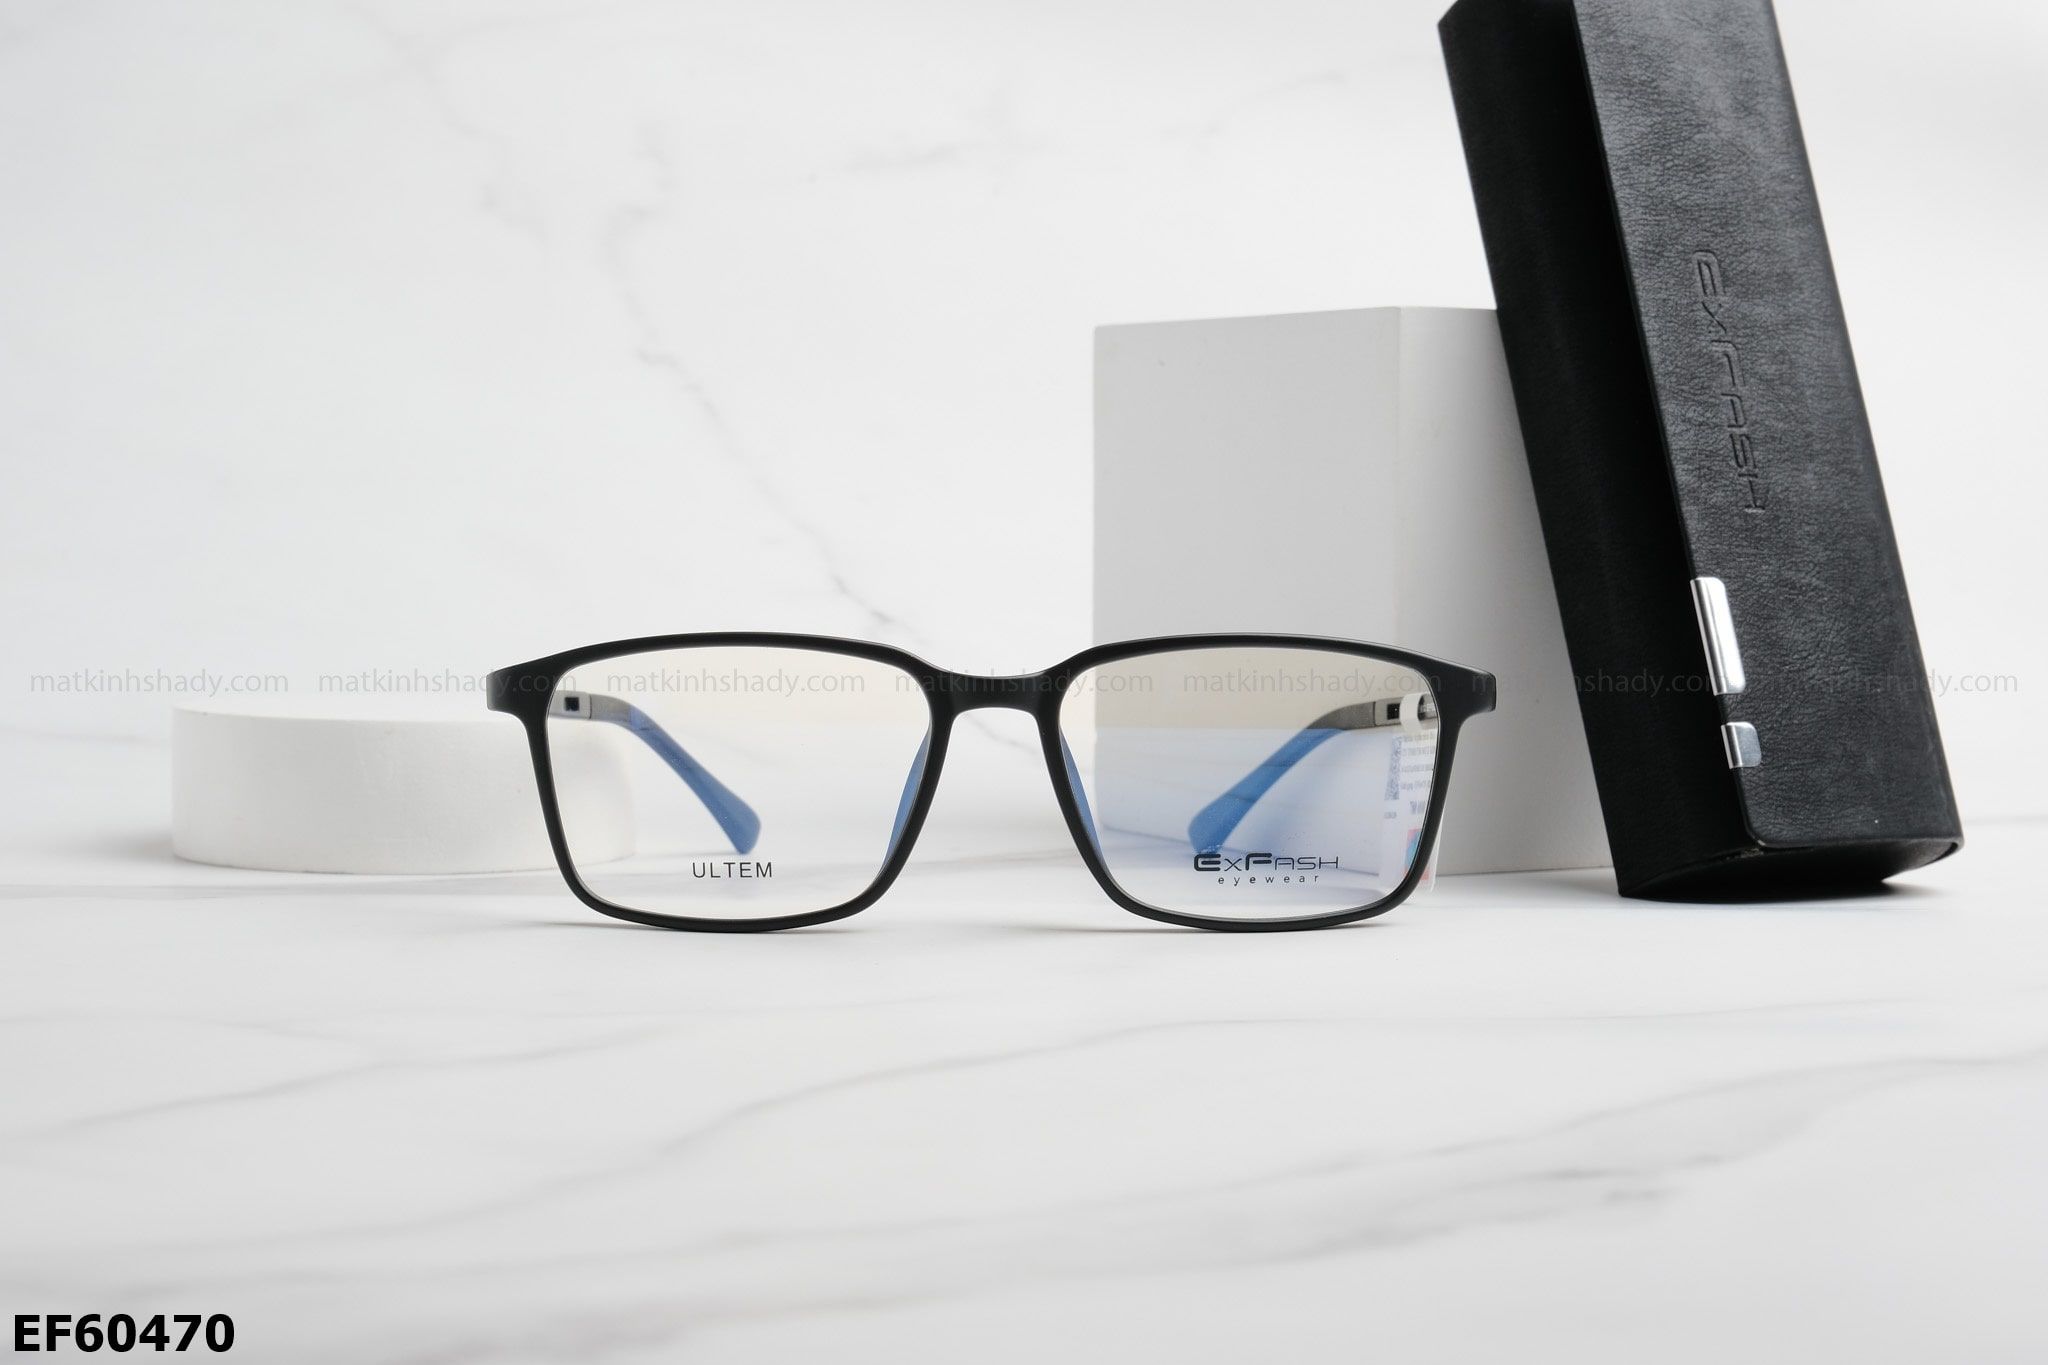  Exfash Eyewear - Glasses - EF60470 